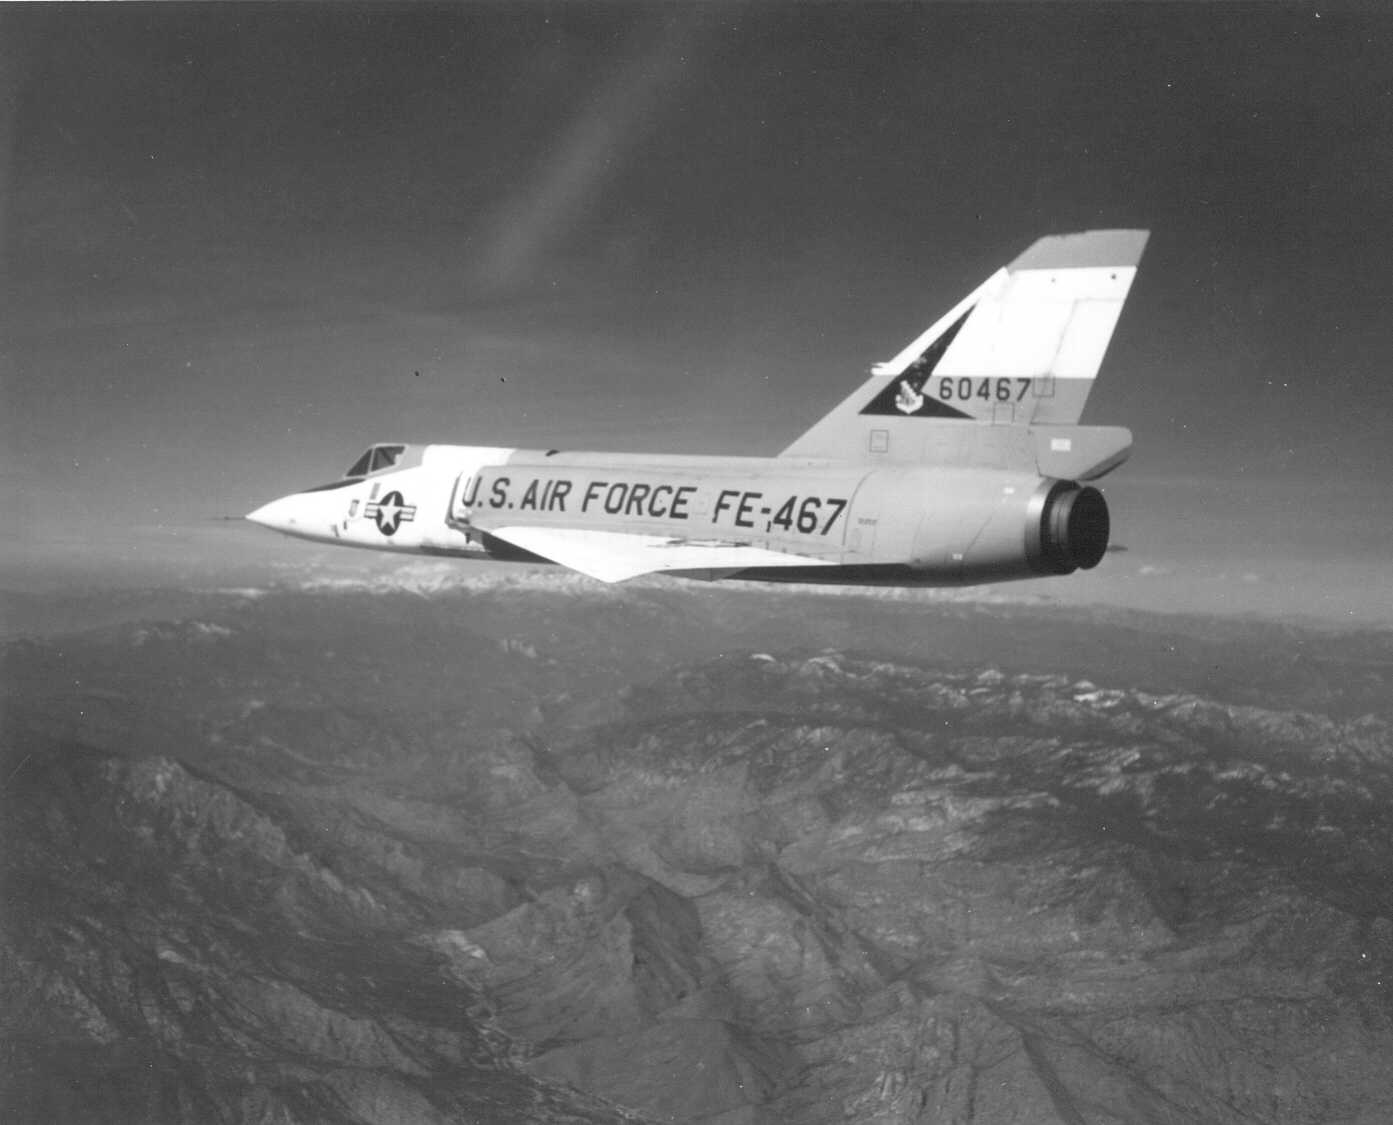 Convair F-106A Delta Dart 56-0467 in flight, seen from left rear quarter. (U.S. Air Force) 